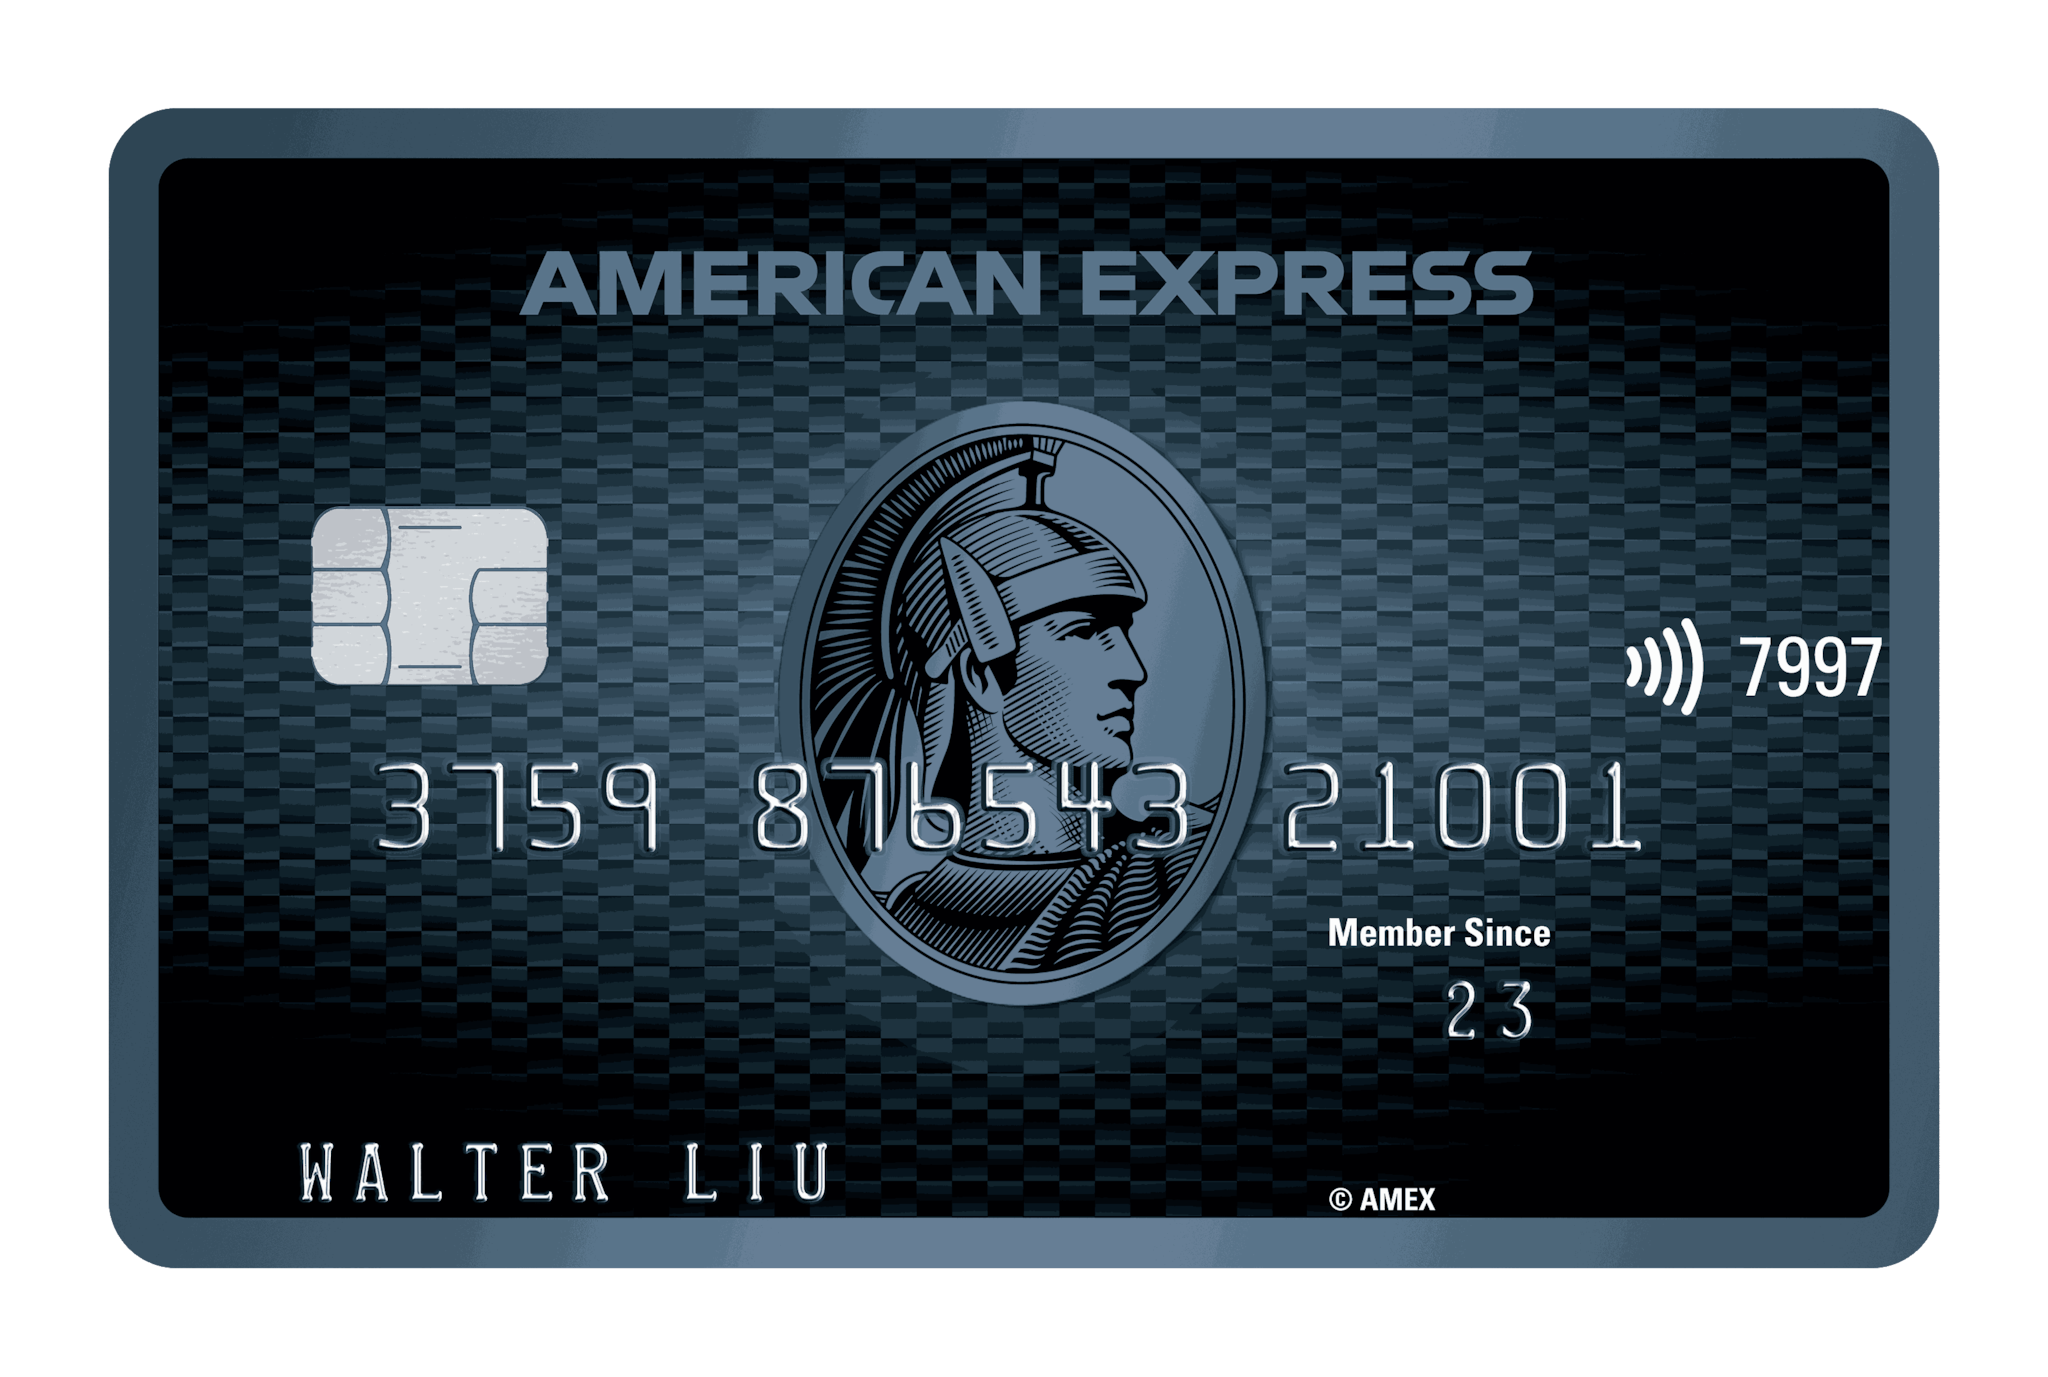 American Express Explorer Credit Card